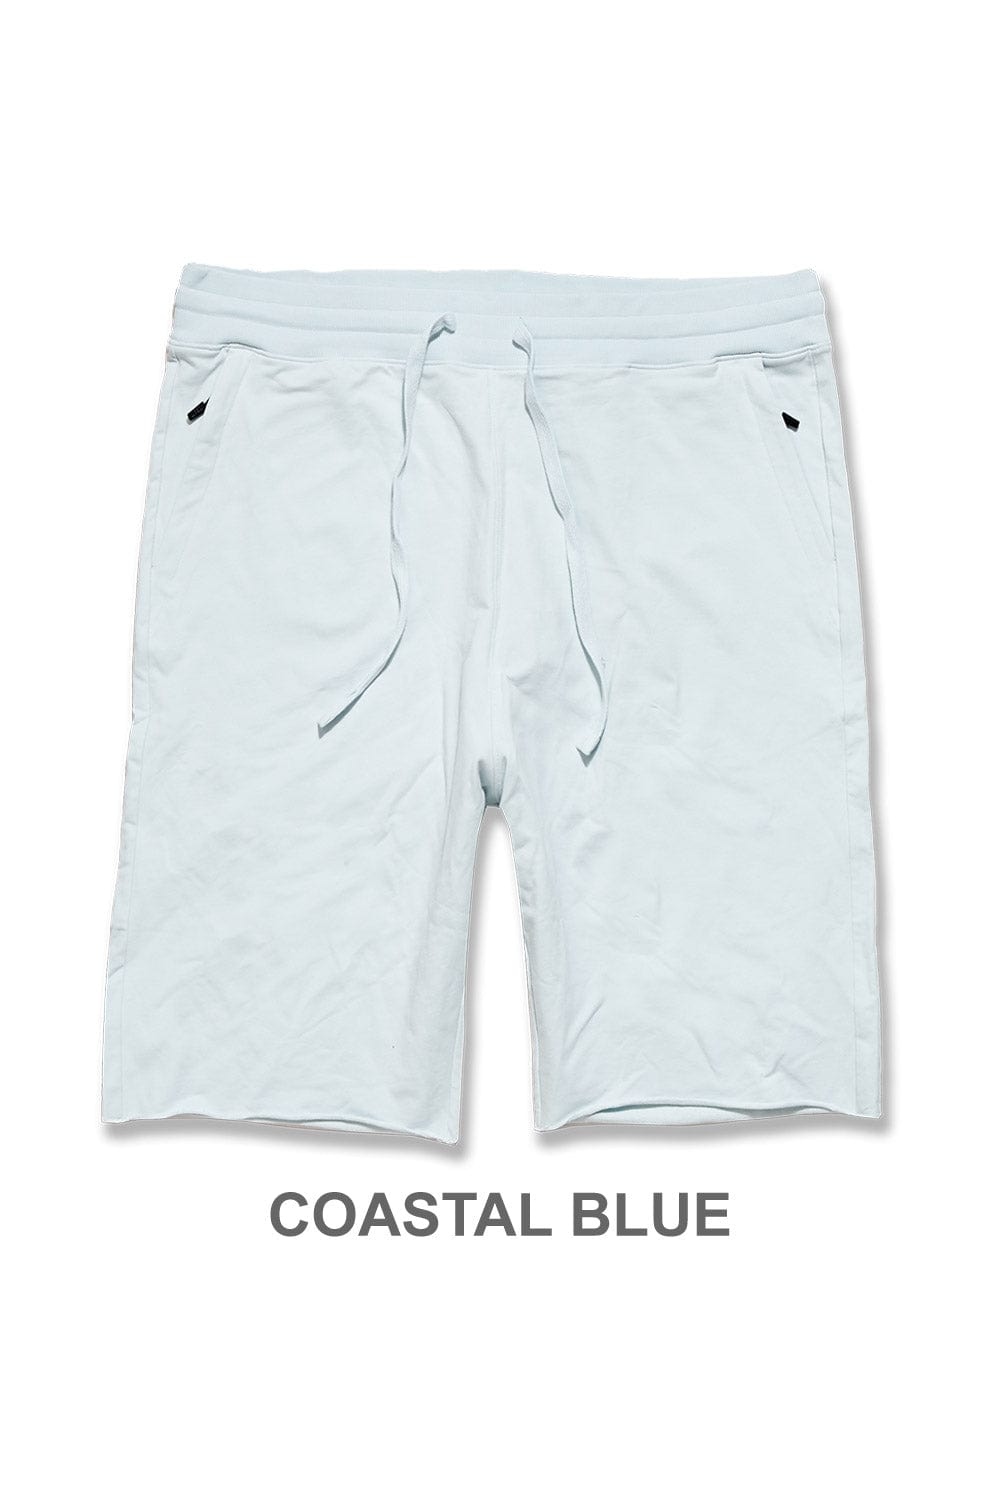 JC Big Men Big Men's OG Palma French Terry Shorts (Name Your Price) Coastal Blue / 4XL